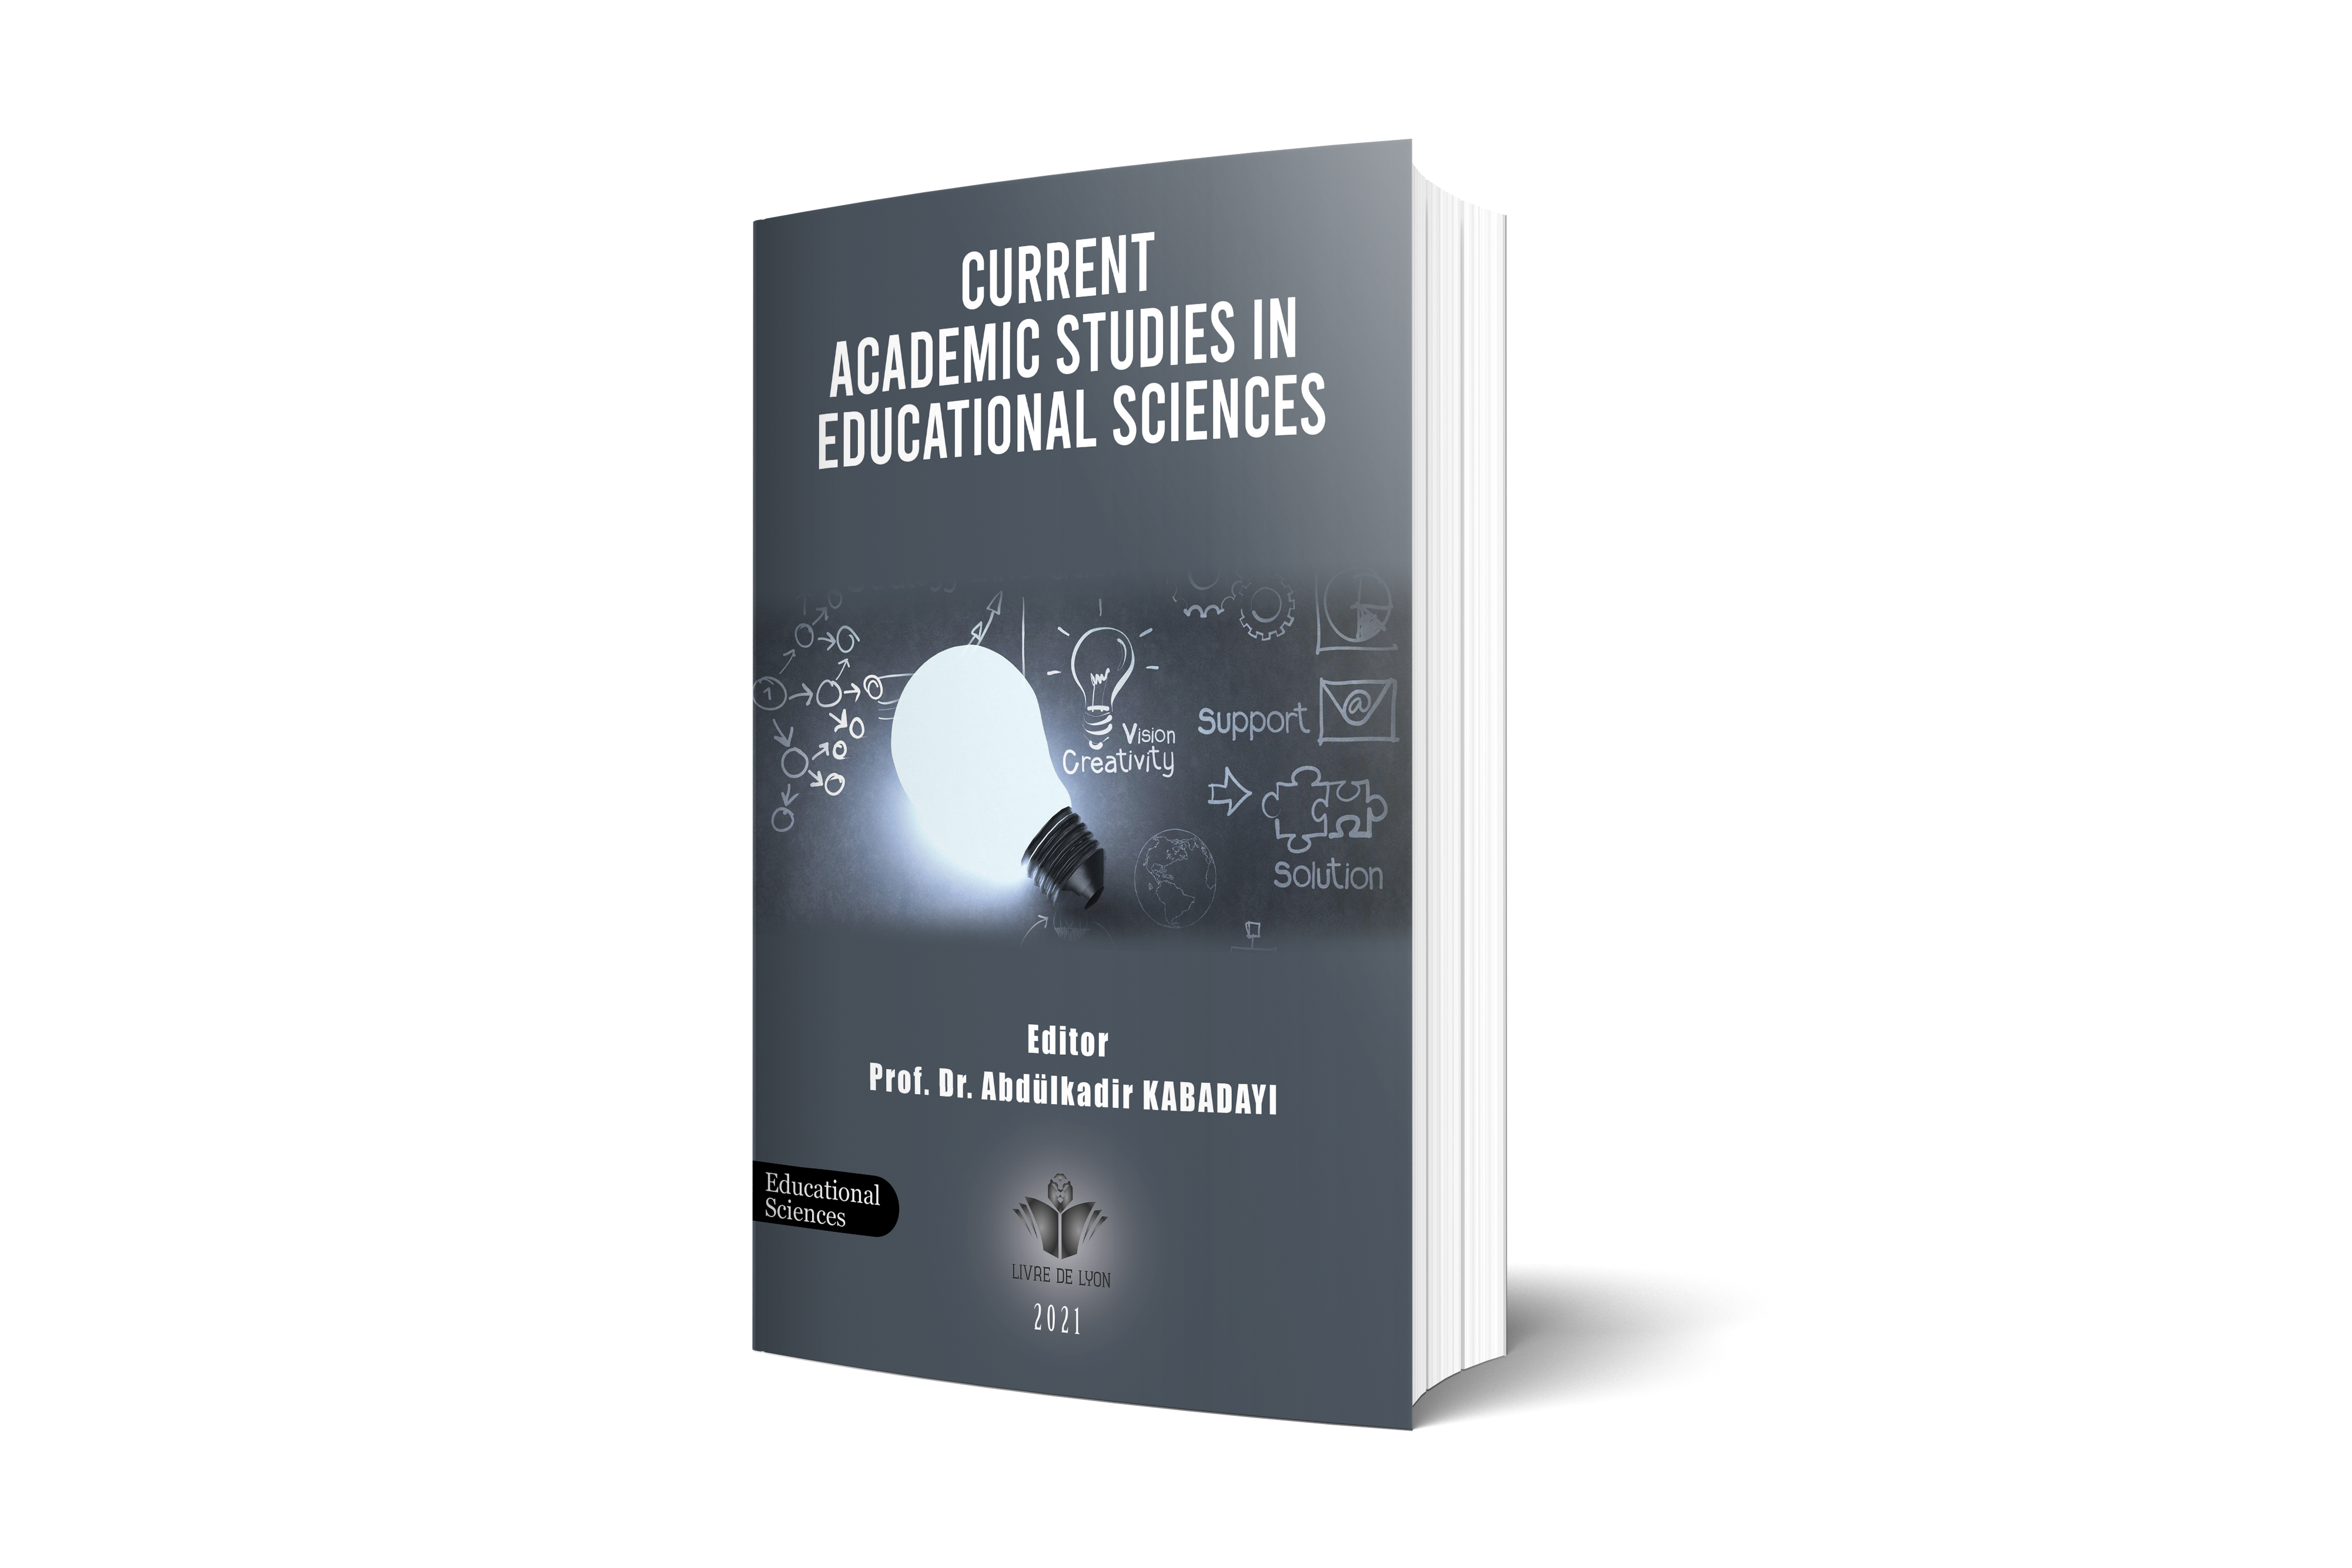 Current Academic Studies in Educational Sciences